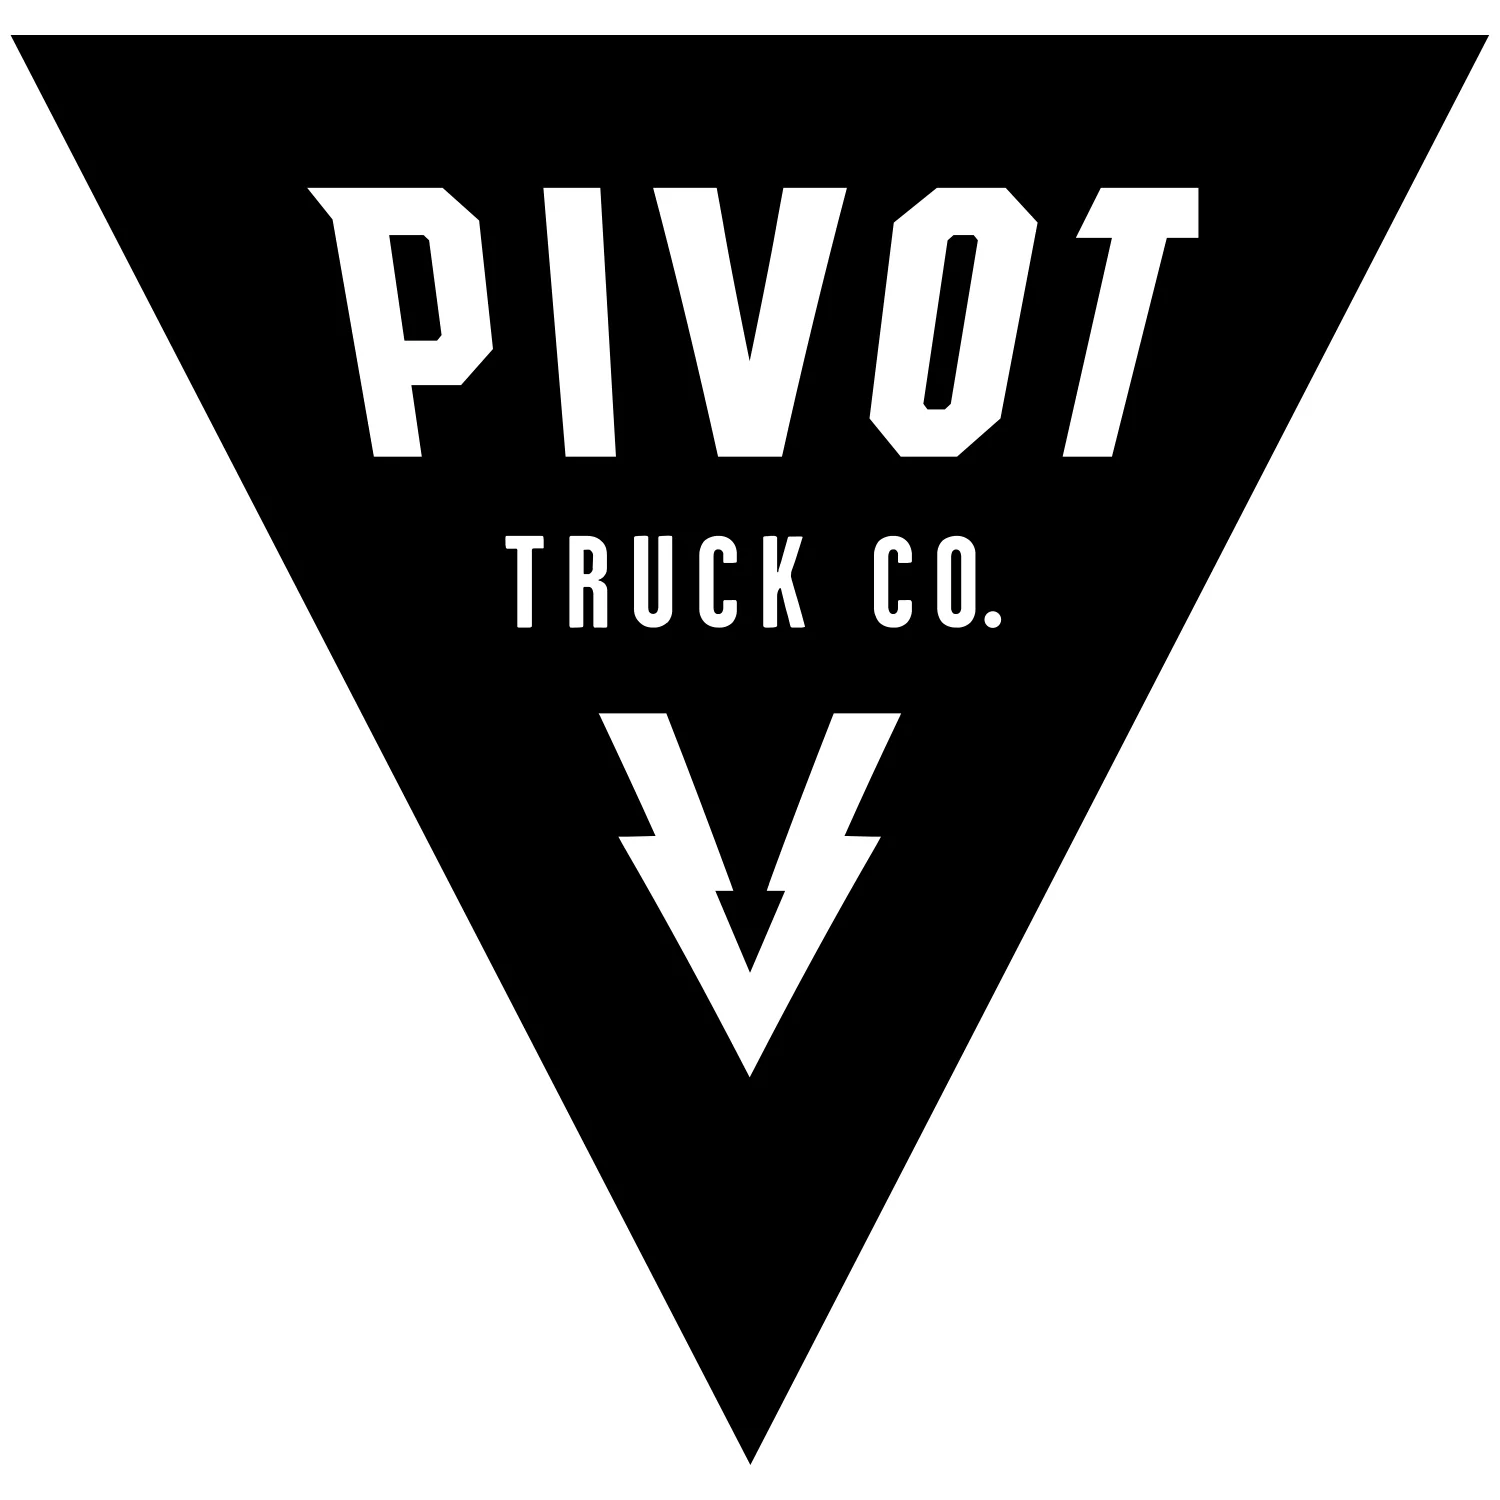 PIVOT TRUCK Co.